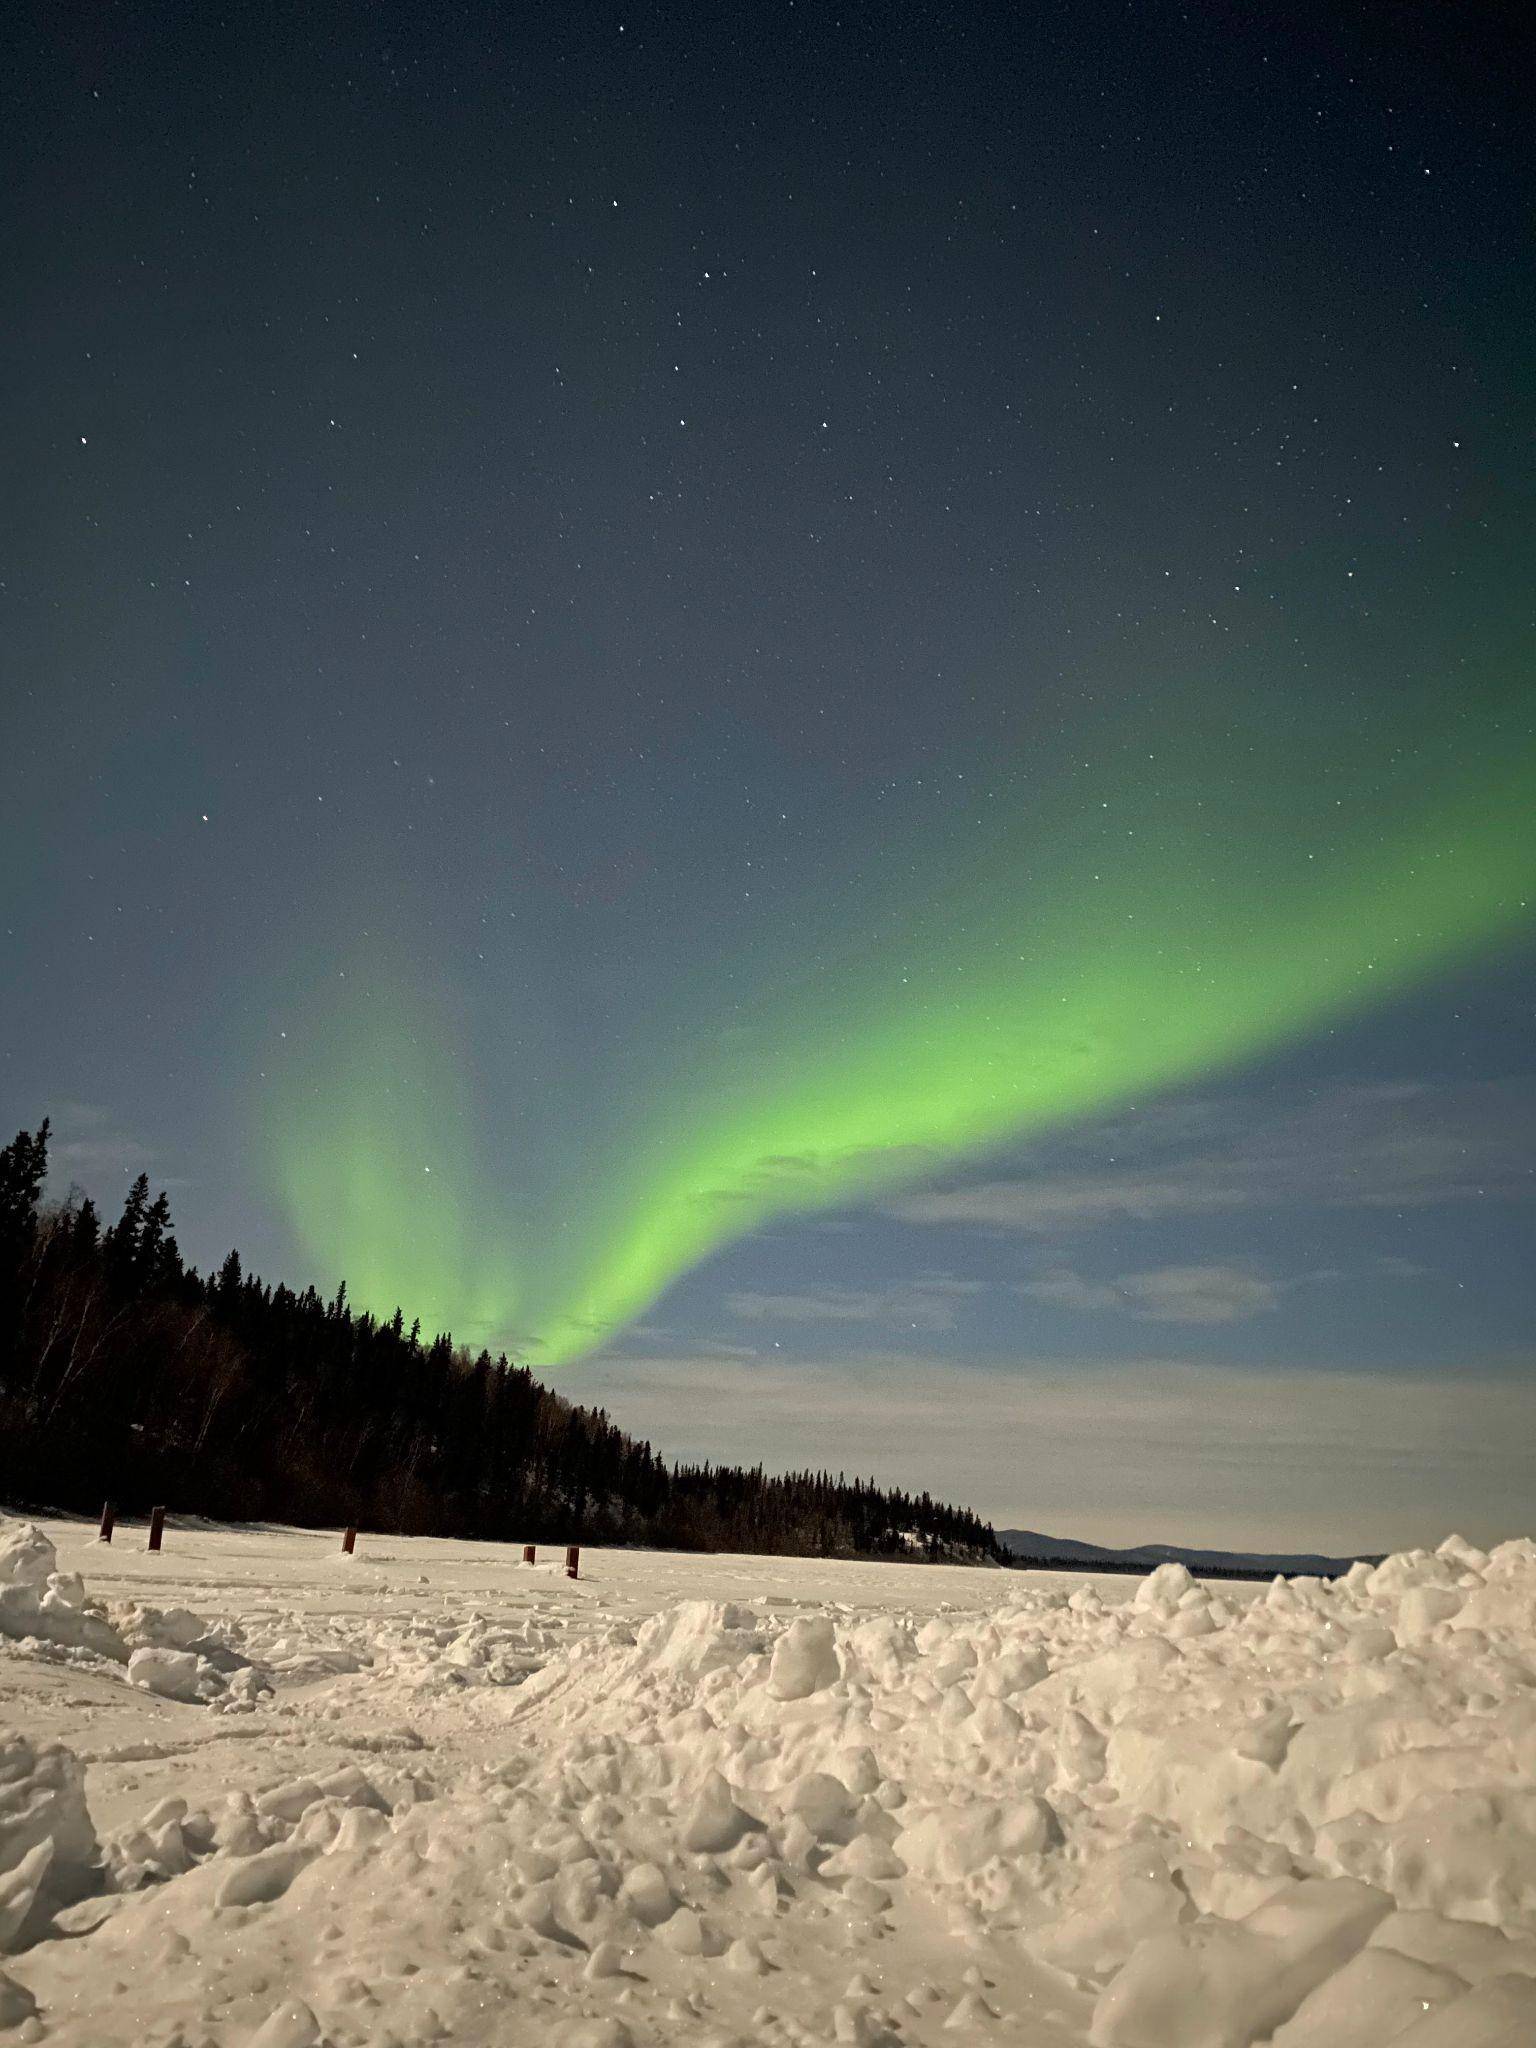 The Auroras over a frozen lake